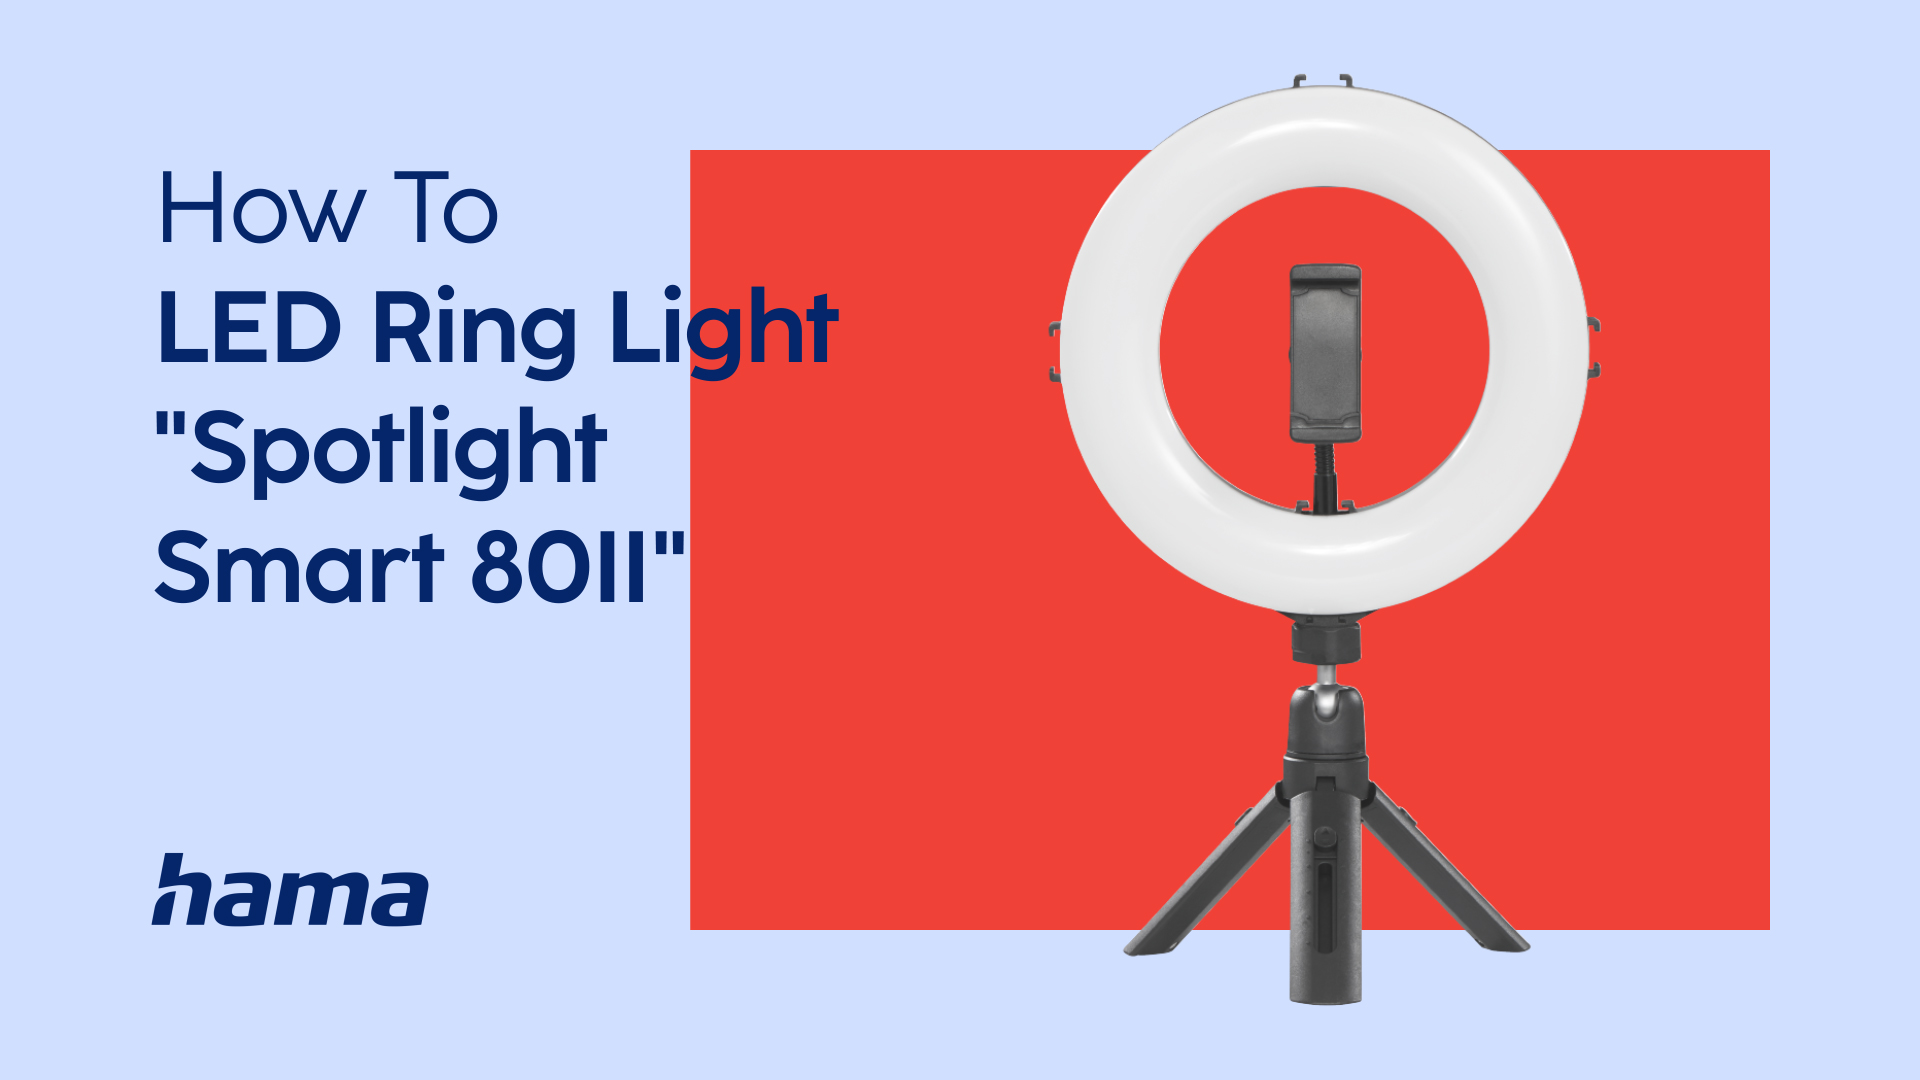 Hama LED Ring Light "Spotlight Smart 80II"